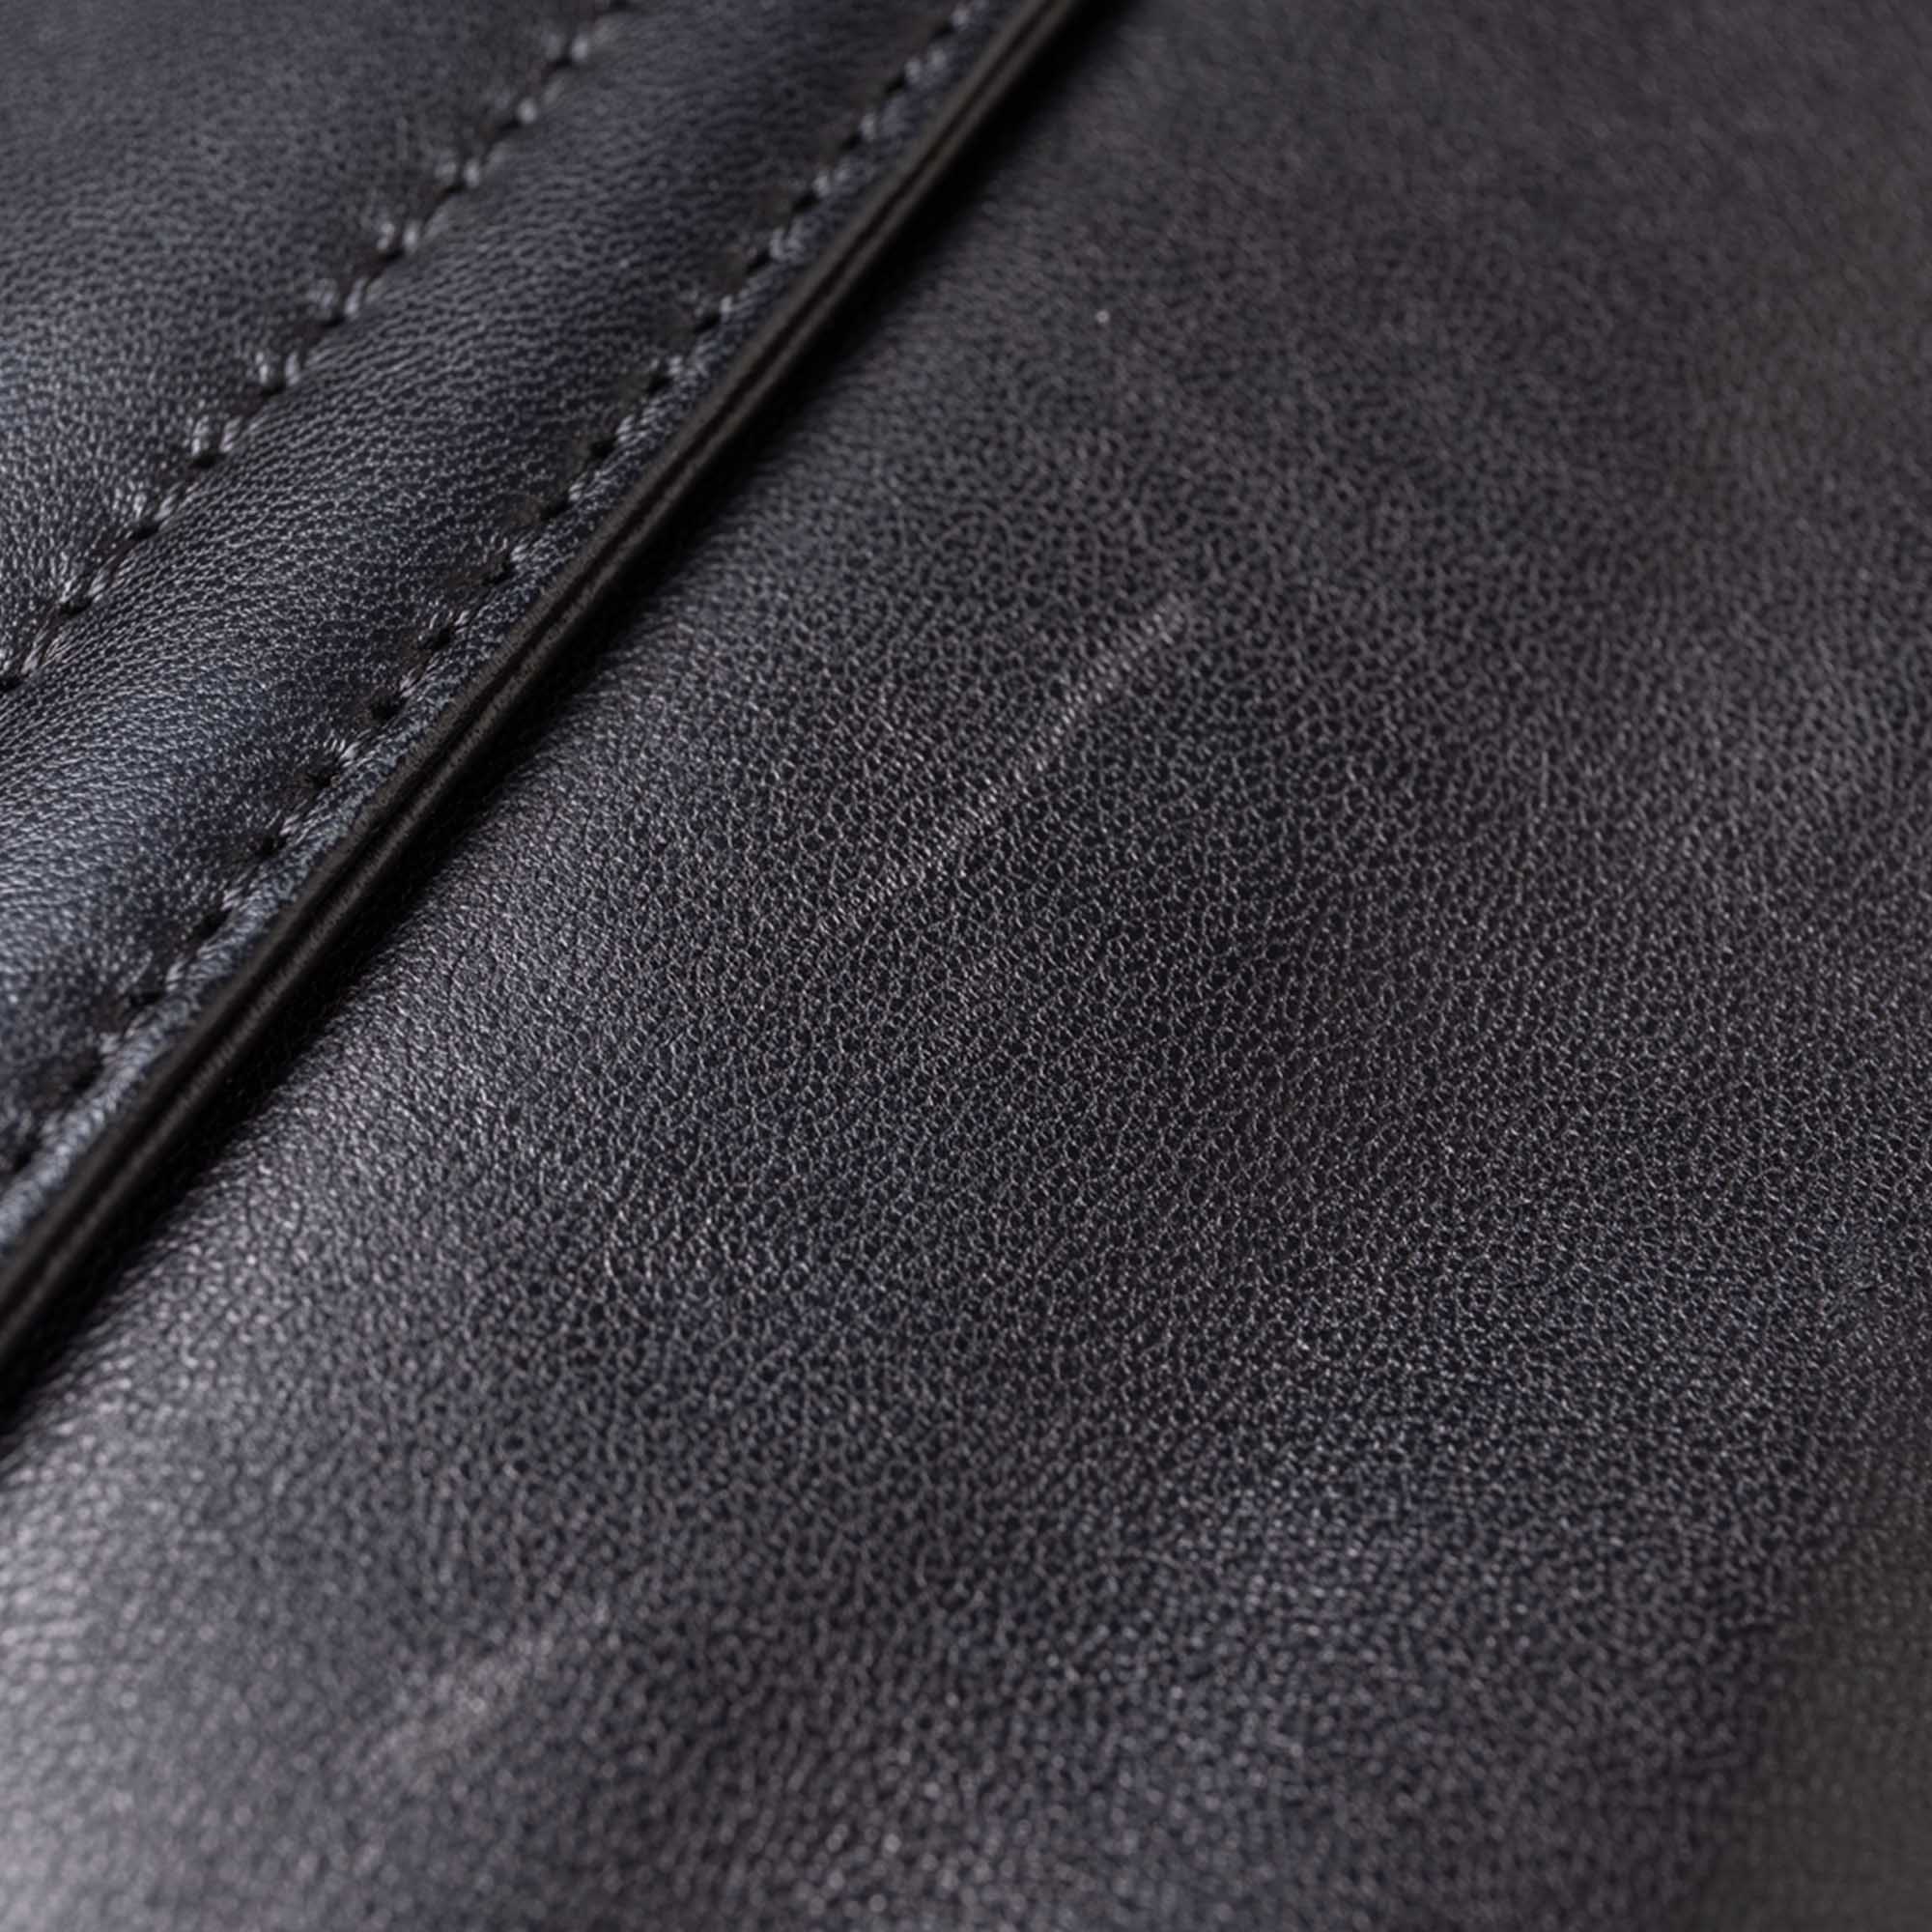 Fendi Leather Clutch Bag - Image 7 of 11